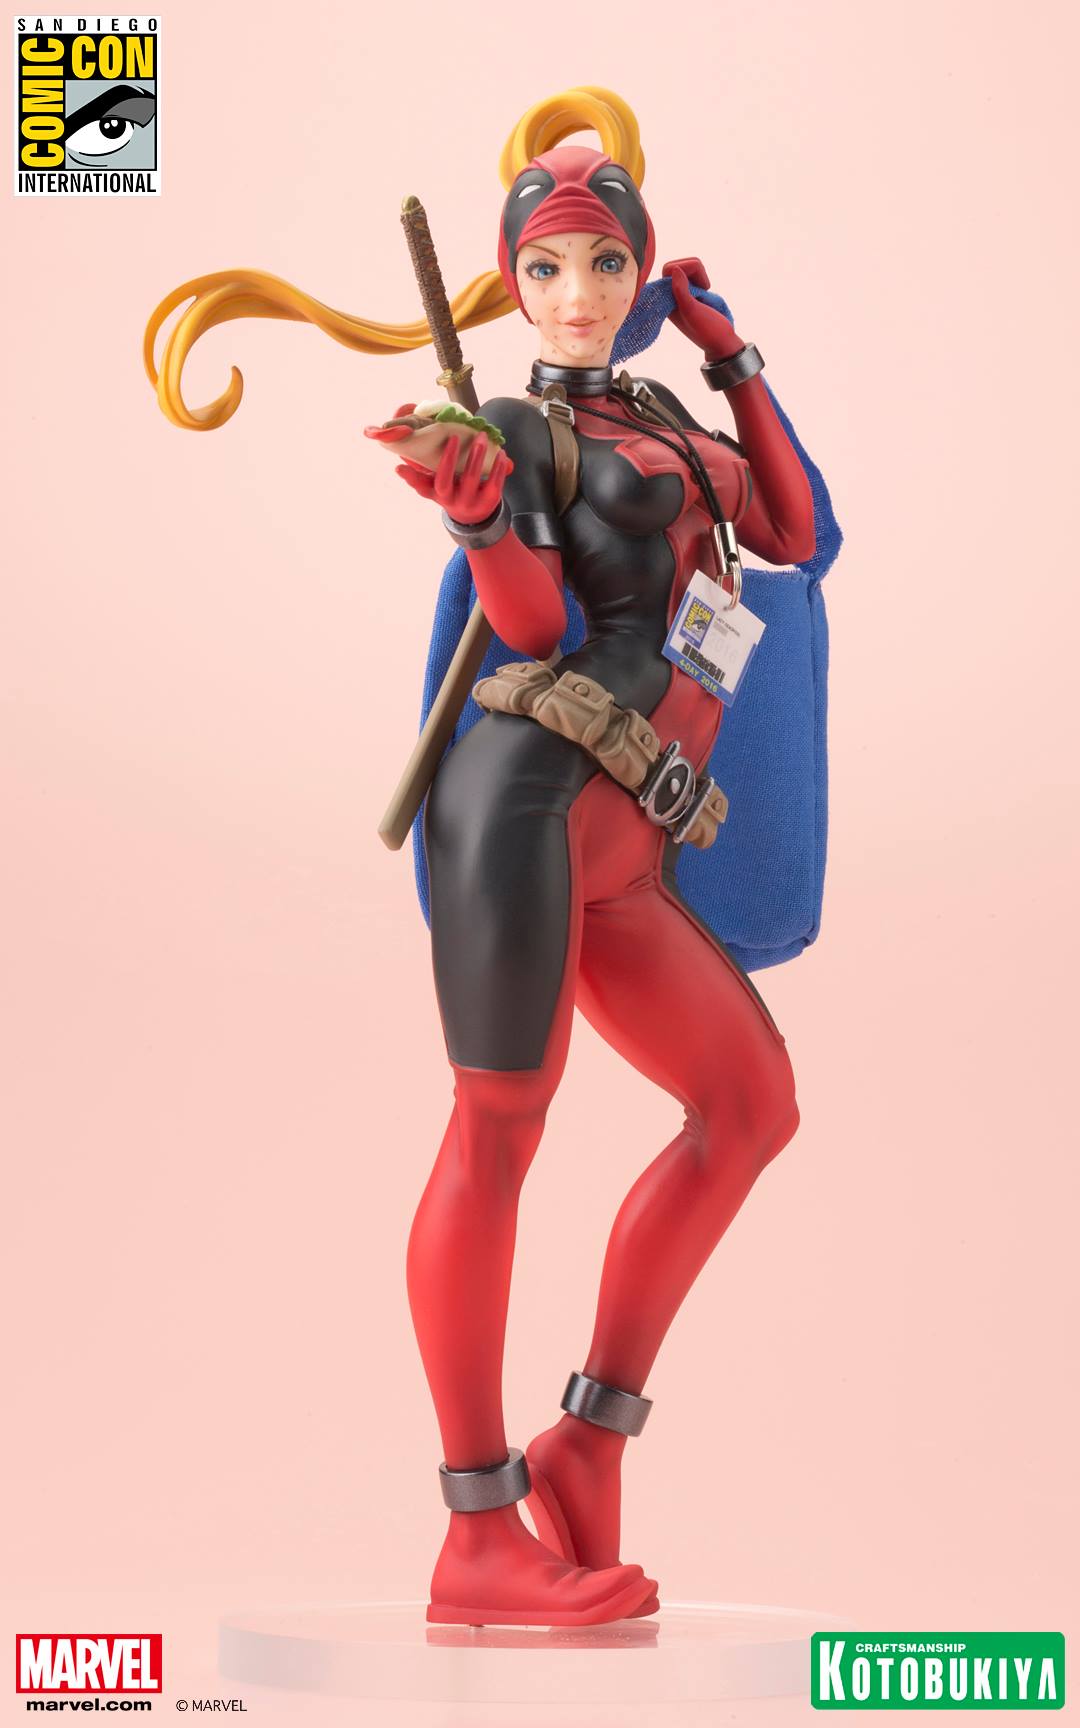 Kotobukiya Bishoujo SDCC 2016 Marvel Lady Deadpool Statue Figure Exclusive